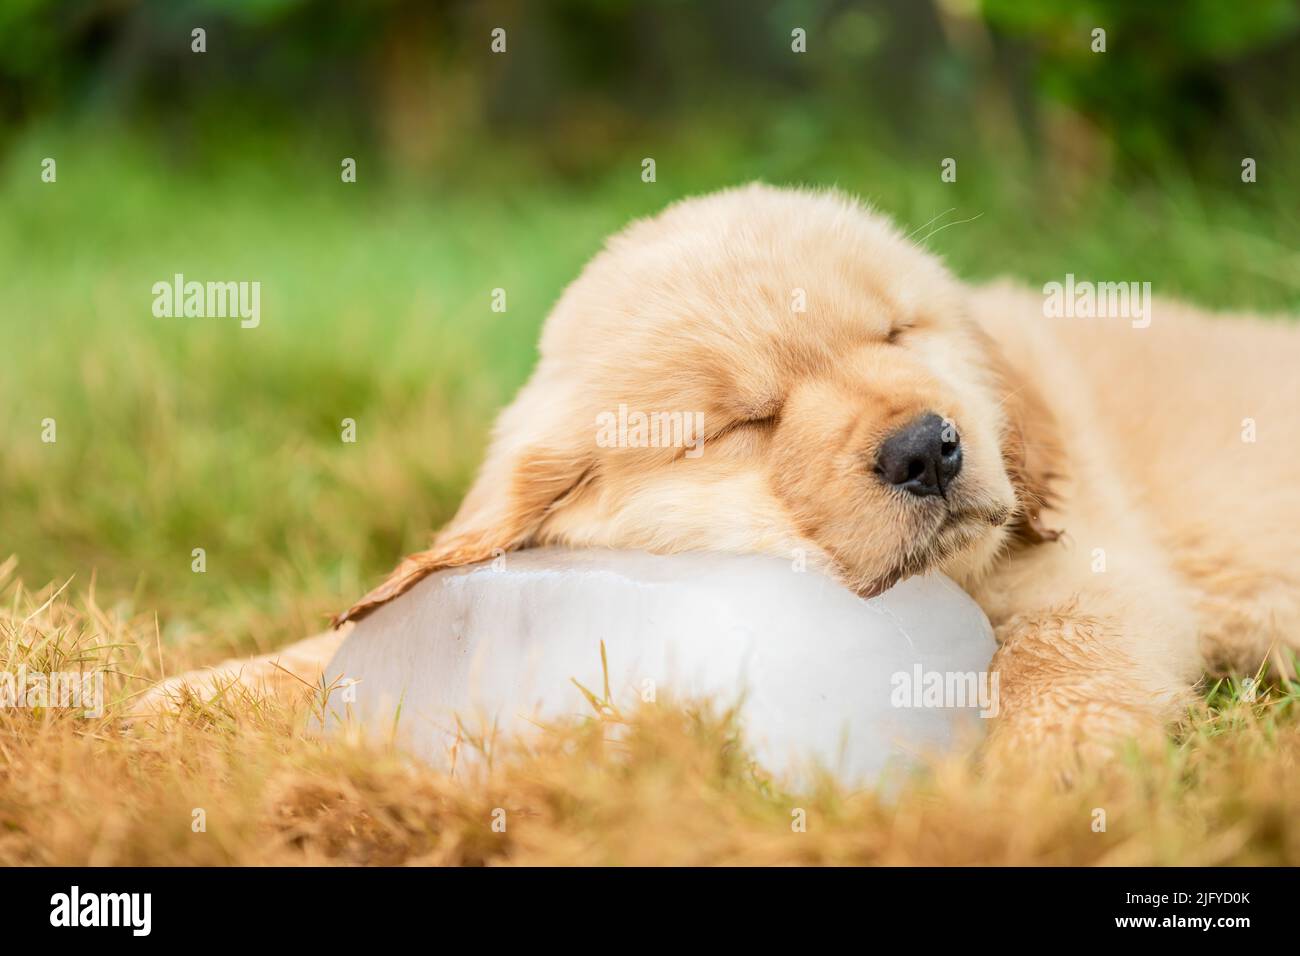 Little cute puppy (Golden Retriever) sleeping on the ice cube in the garden. Animal in summer season concept Stock Photo